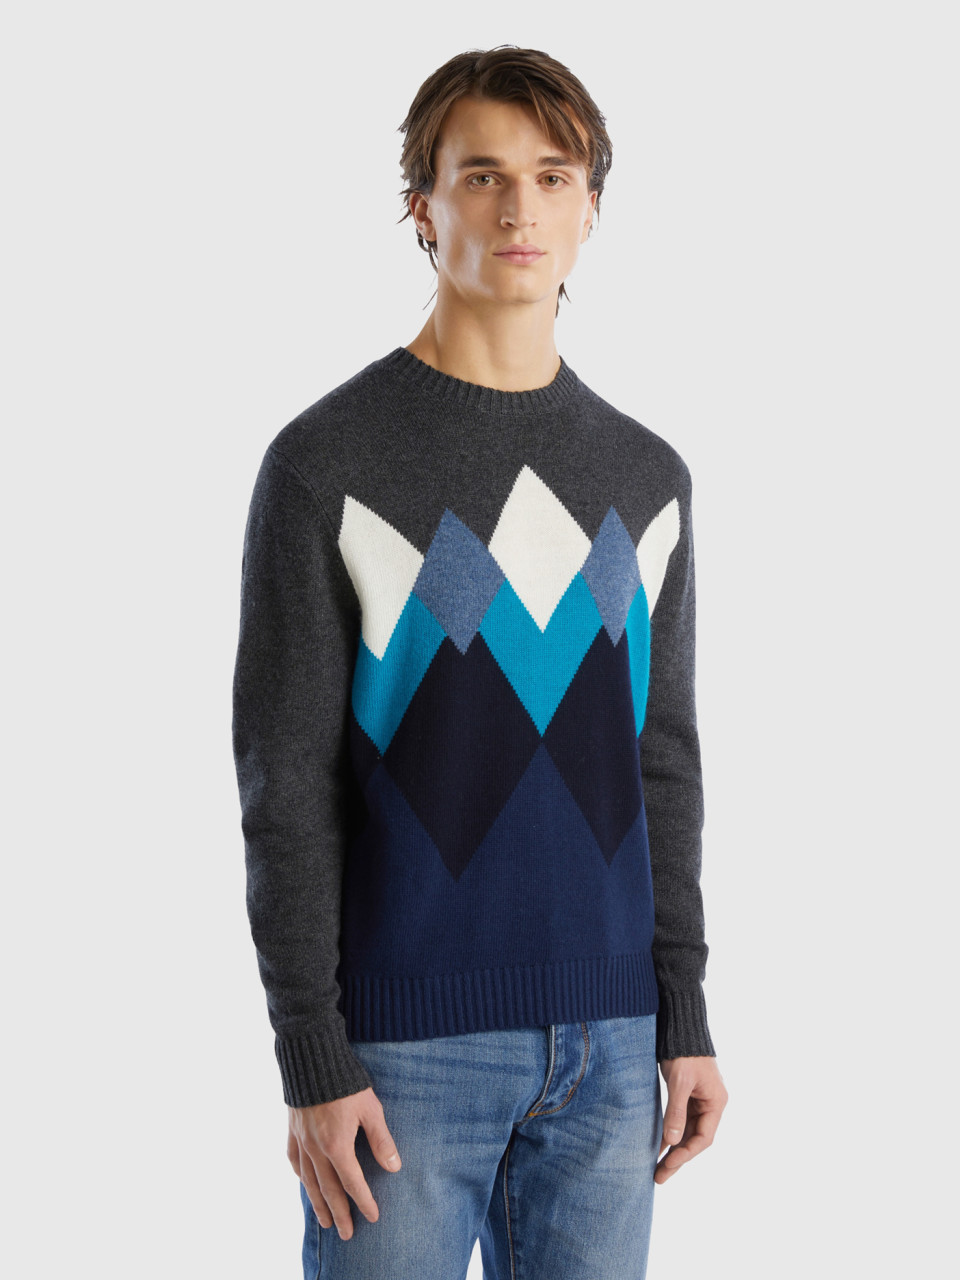 Benetton, Sweater With Geometric Pattern, Dark Gray, Men